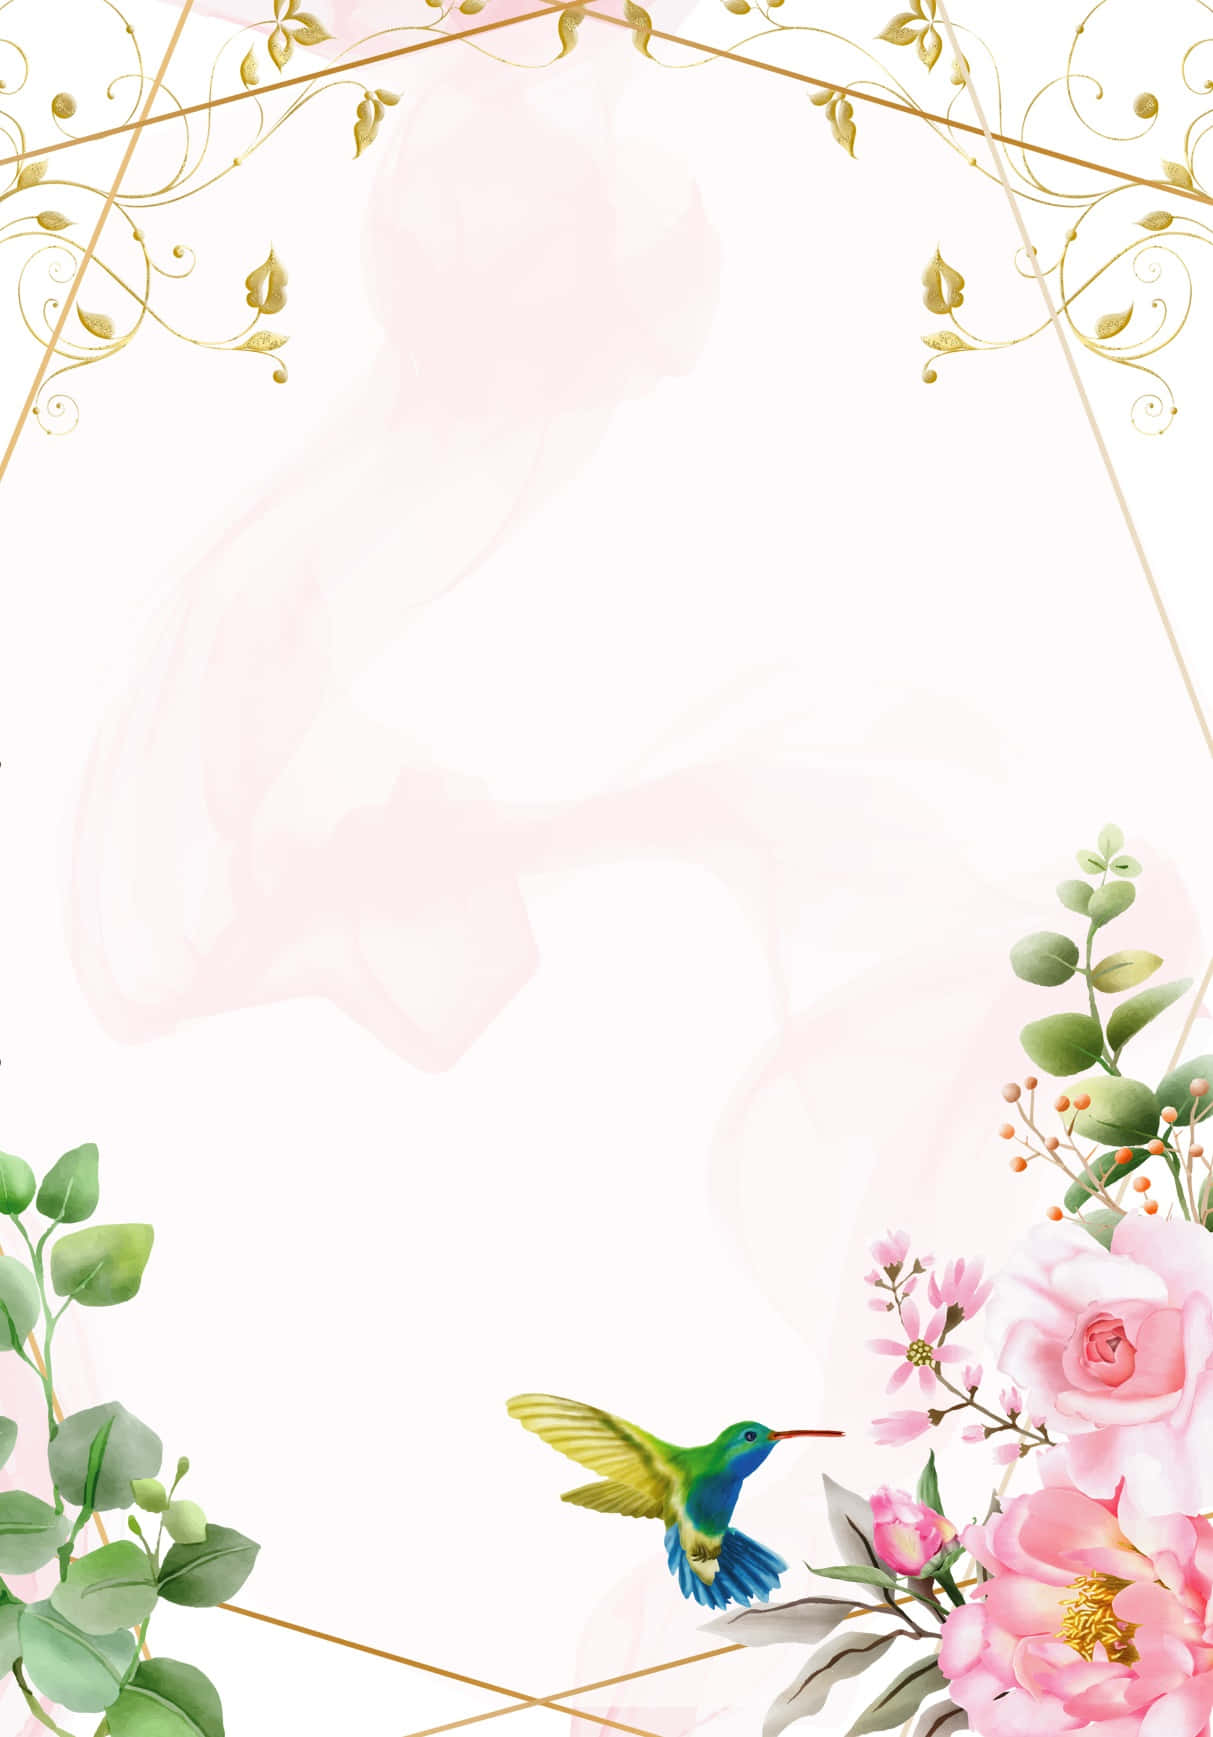 Geometric Frame With Flowers Wedding Invitation Background